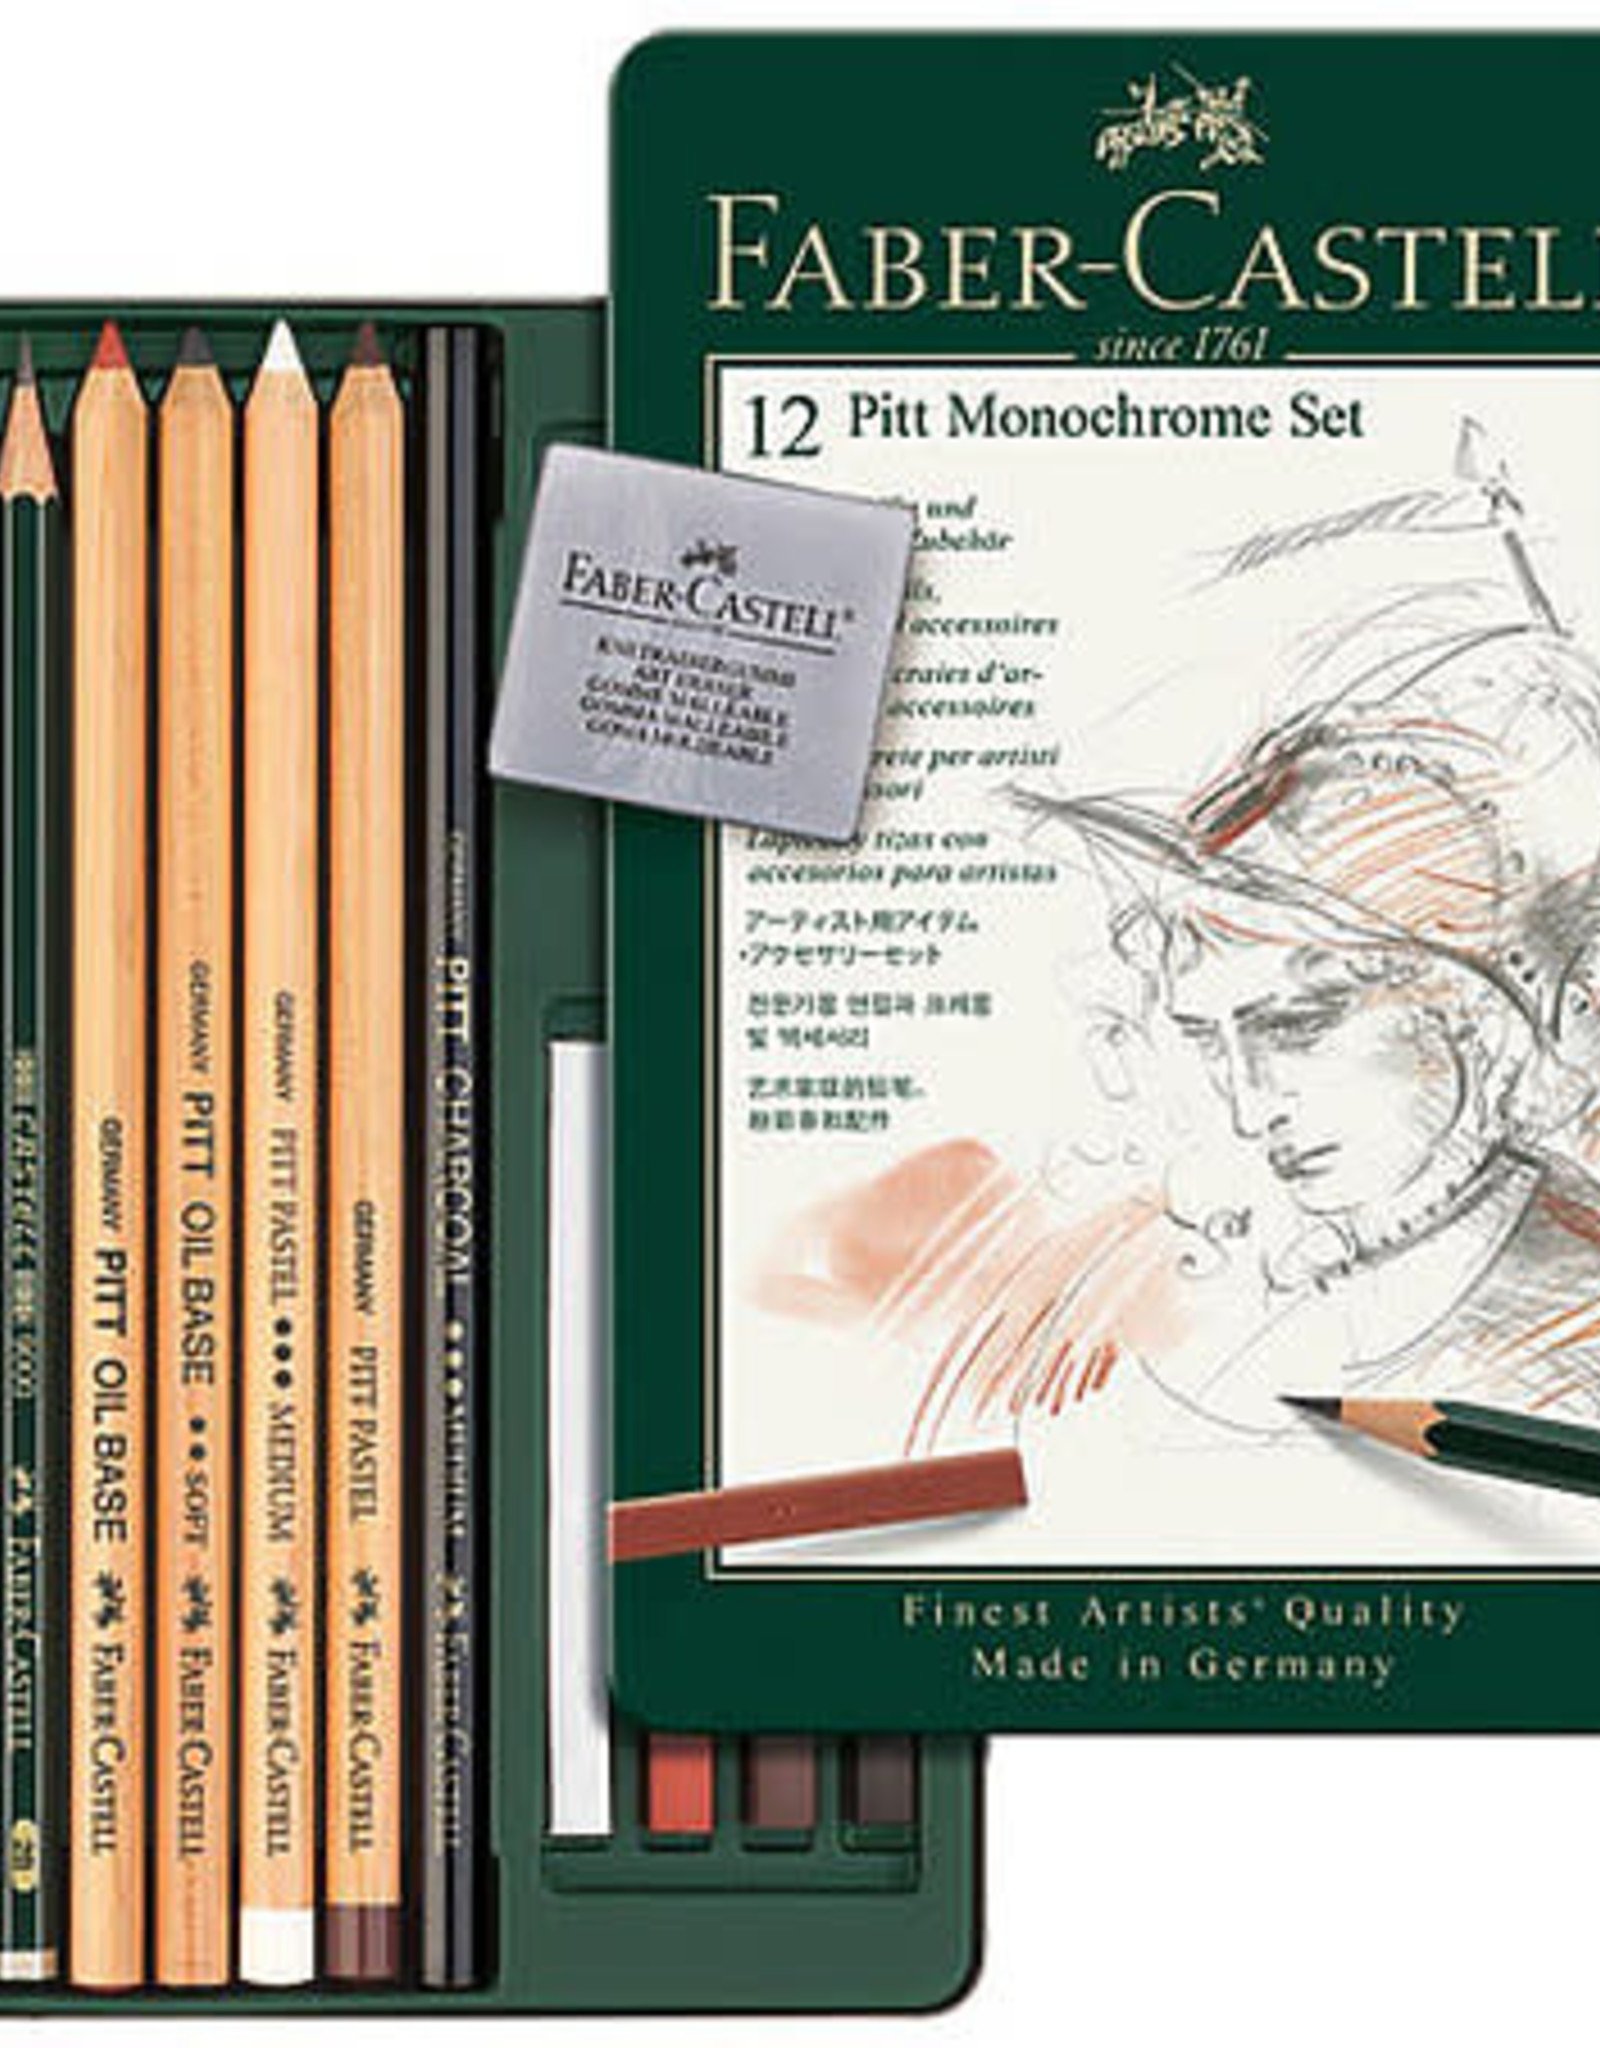 Faber-Castell Pitt Monochrome Set of 12 pencils charcoal eraser pastel